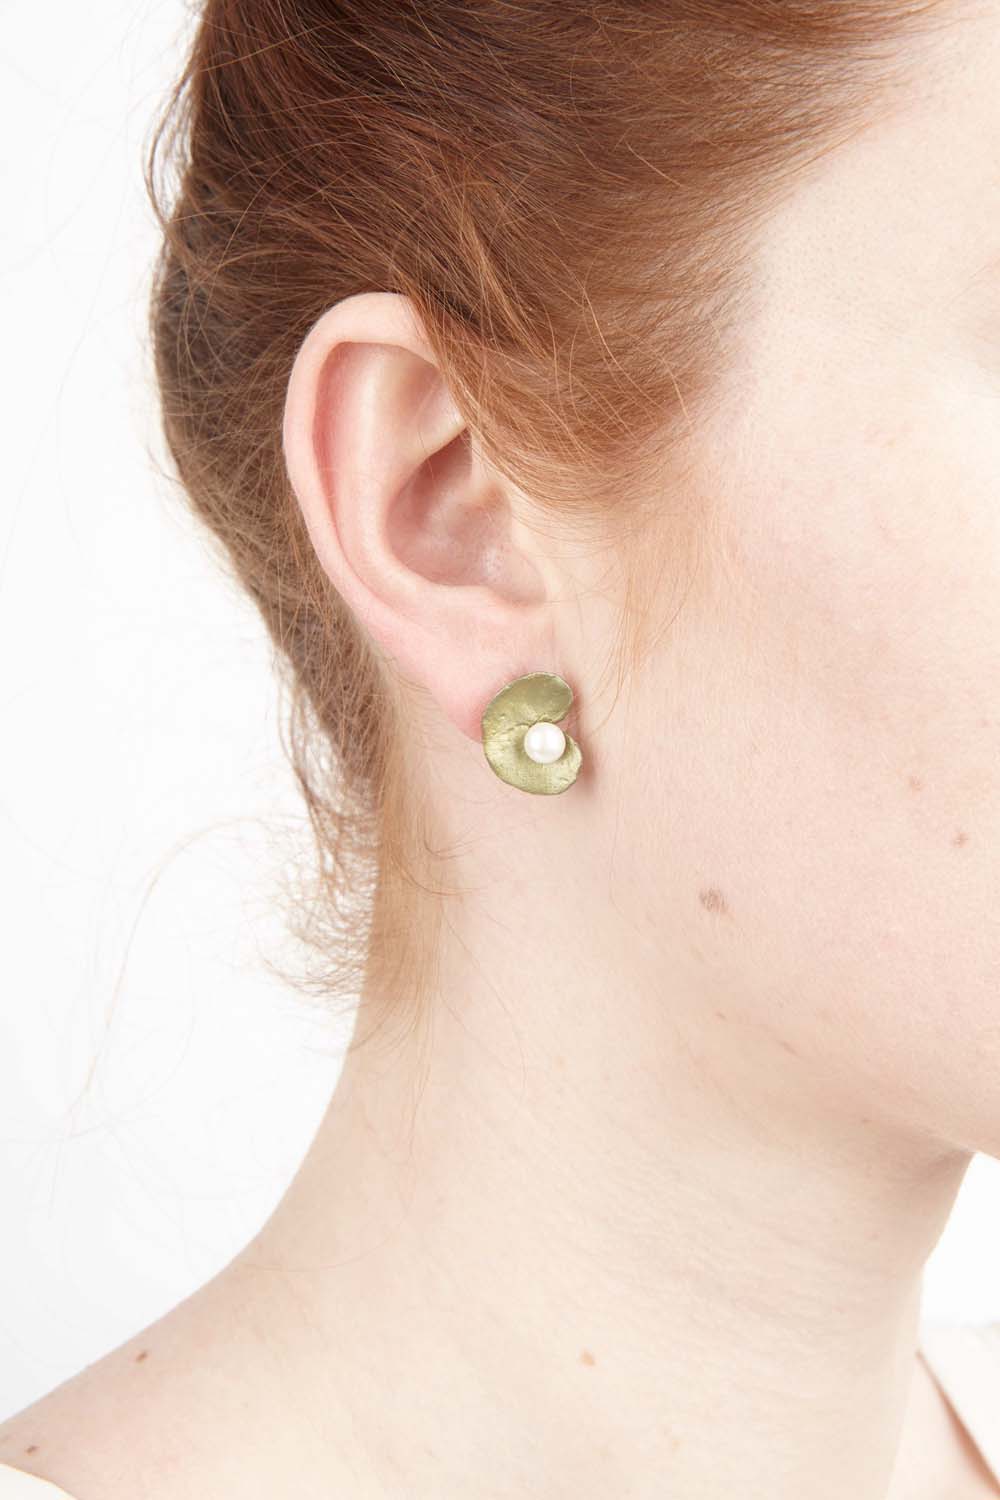 Geranium Earrings - The Nancy Smillie Shop - Art, Jewellery & Designer Gifts Glasgow